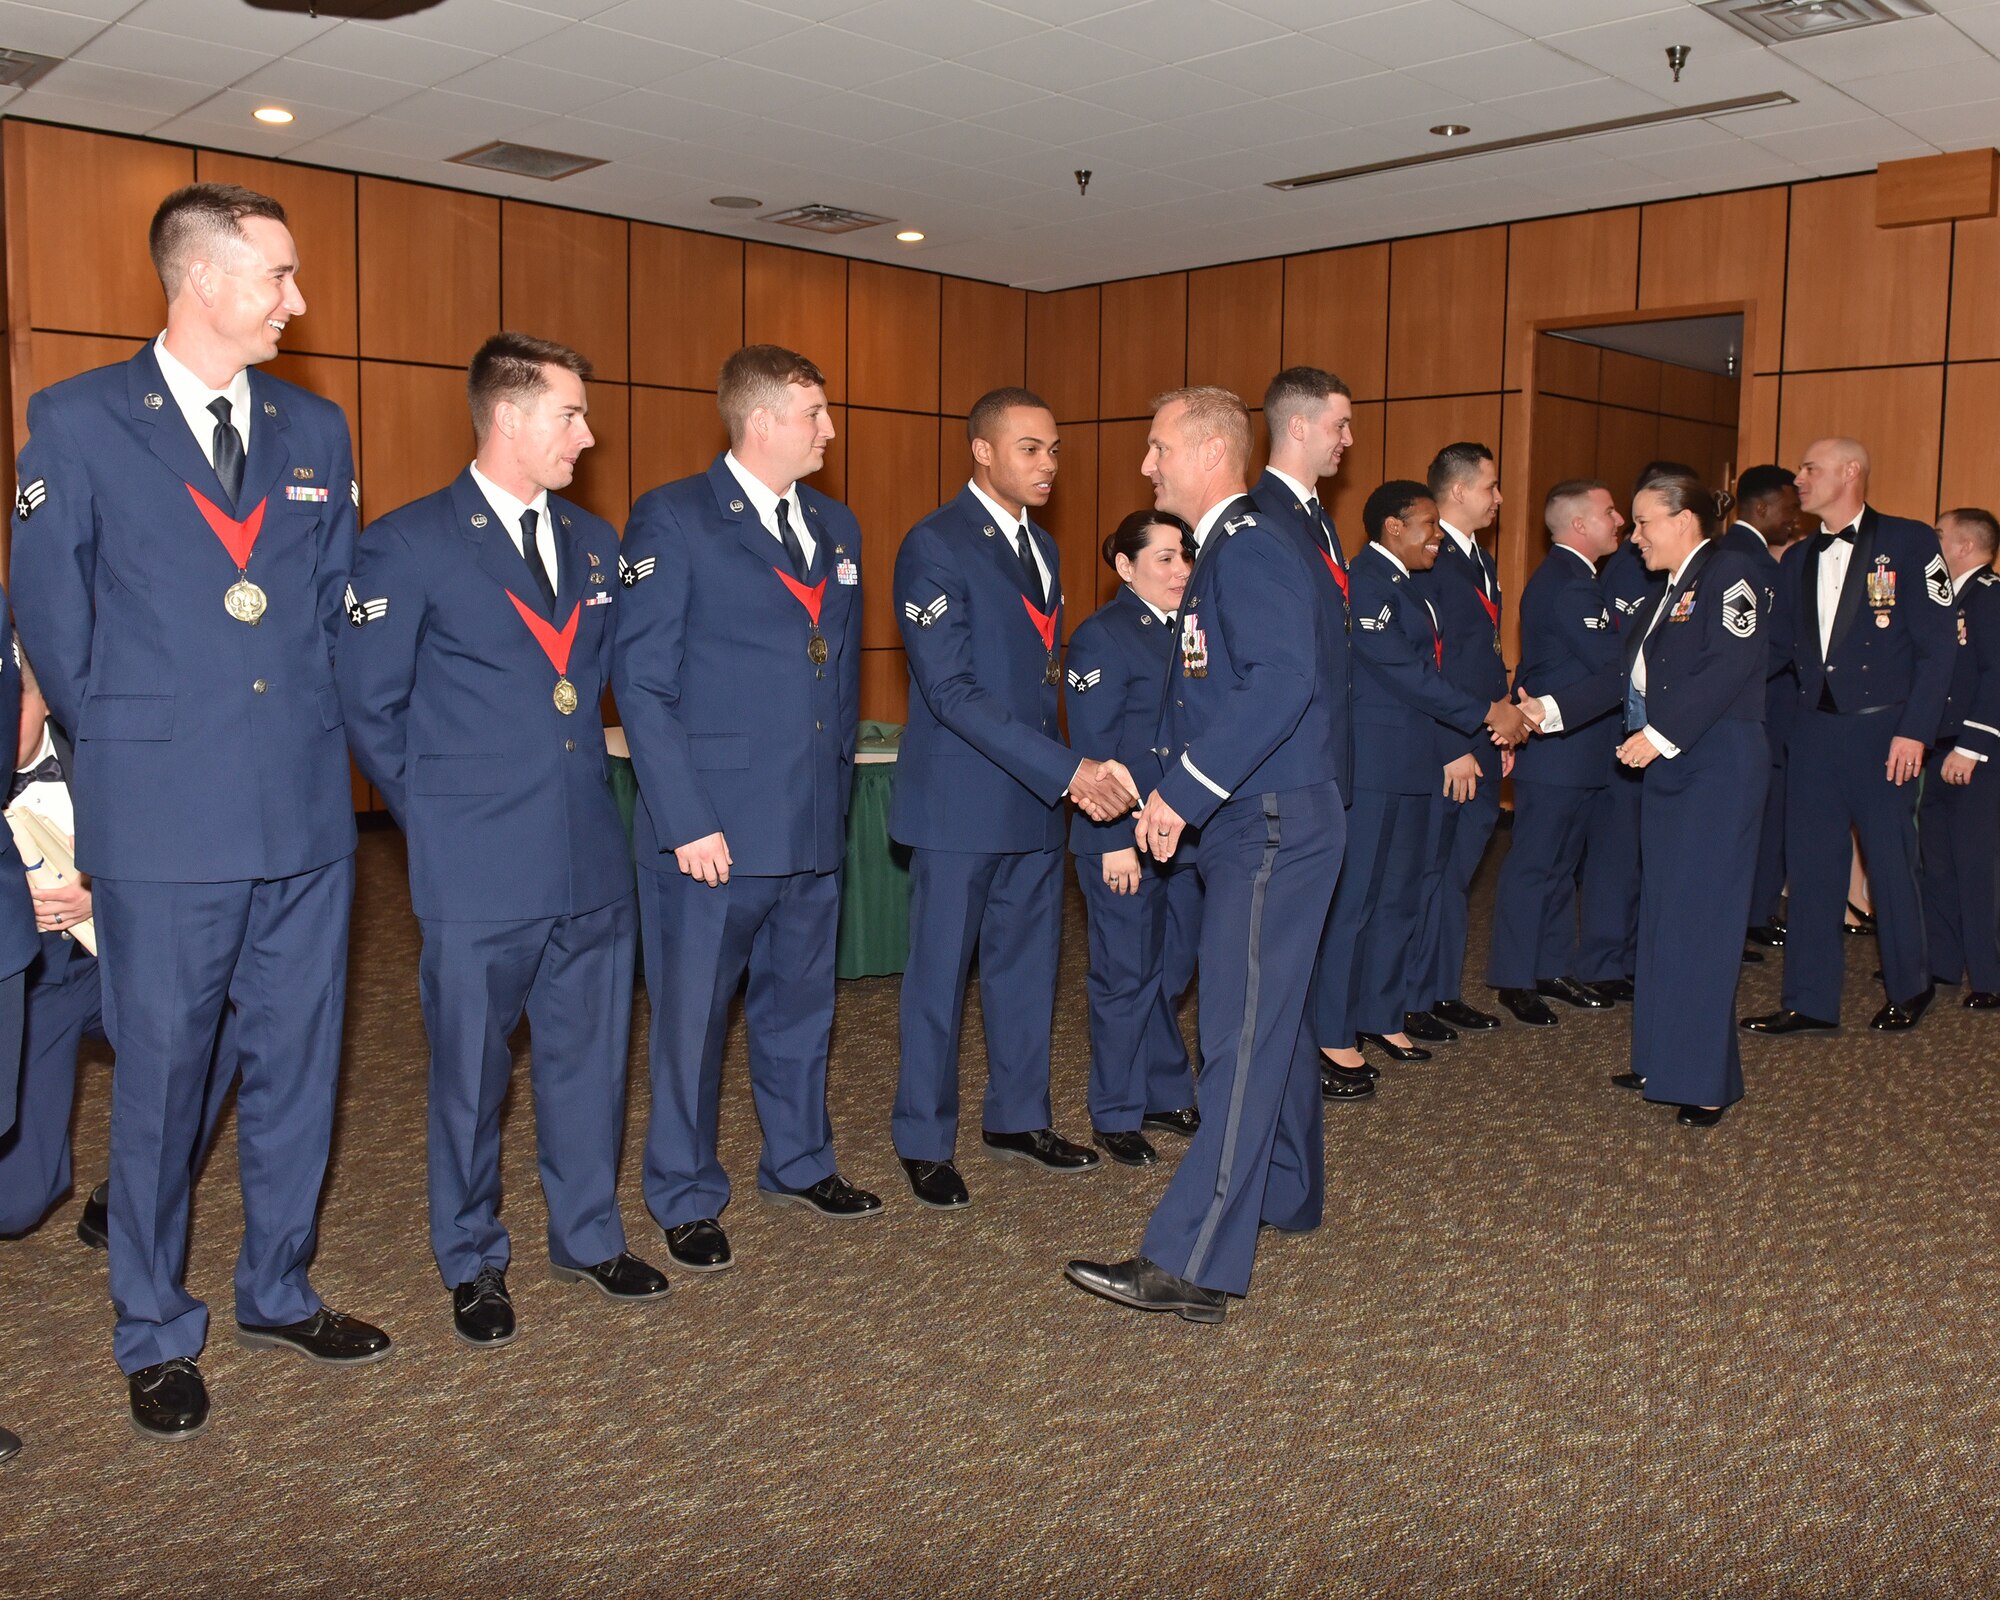 Vice commander congratulates the graduates of Airmen Leadership School.